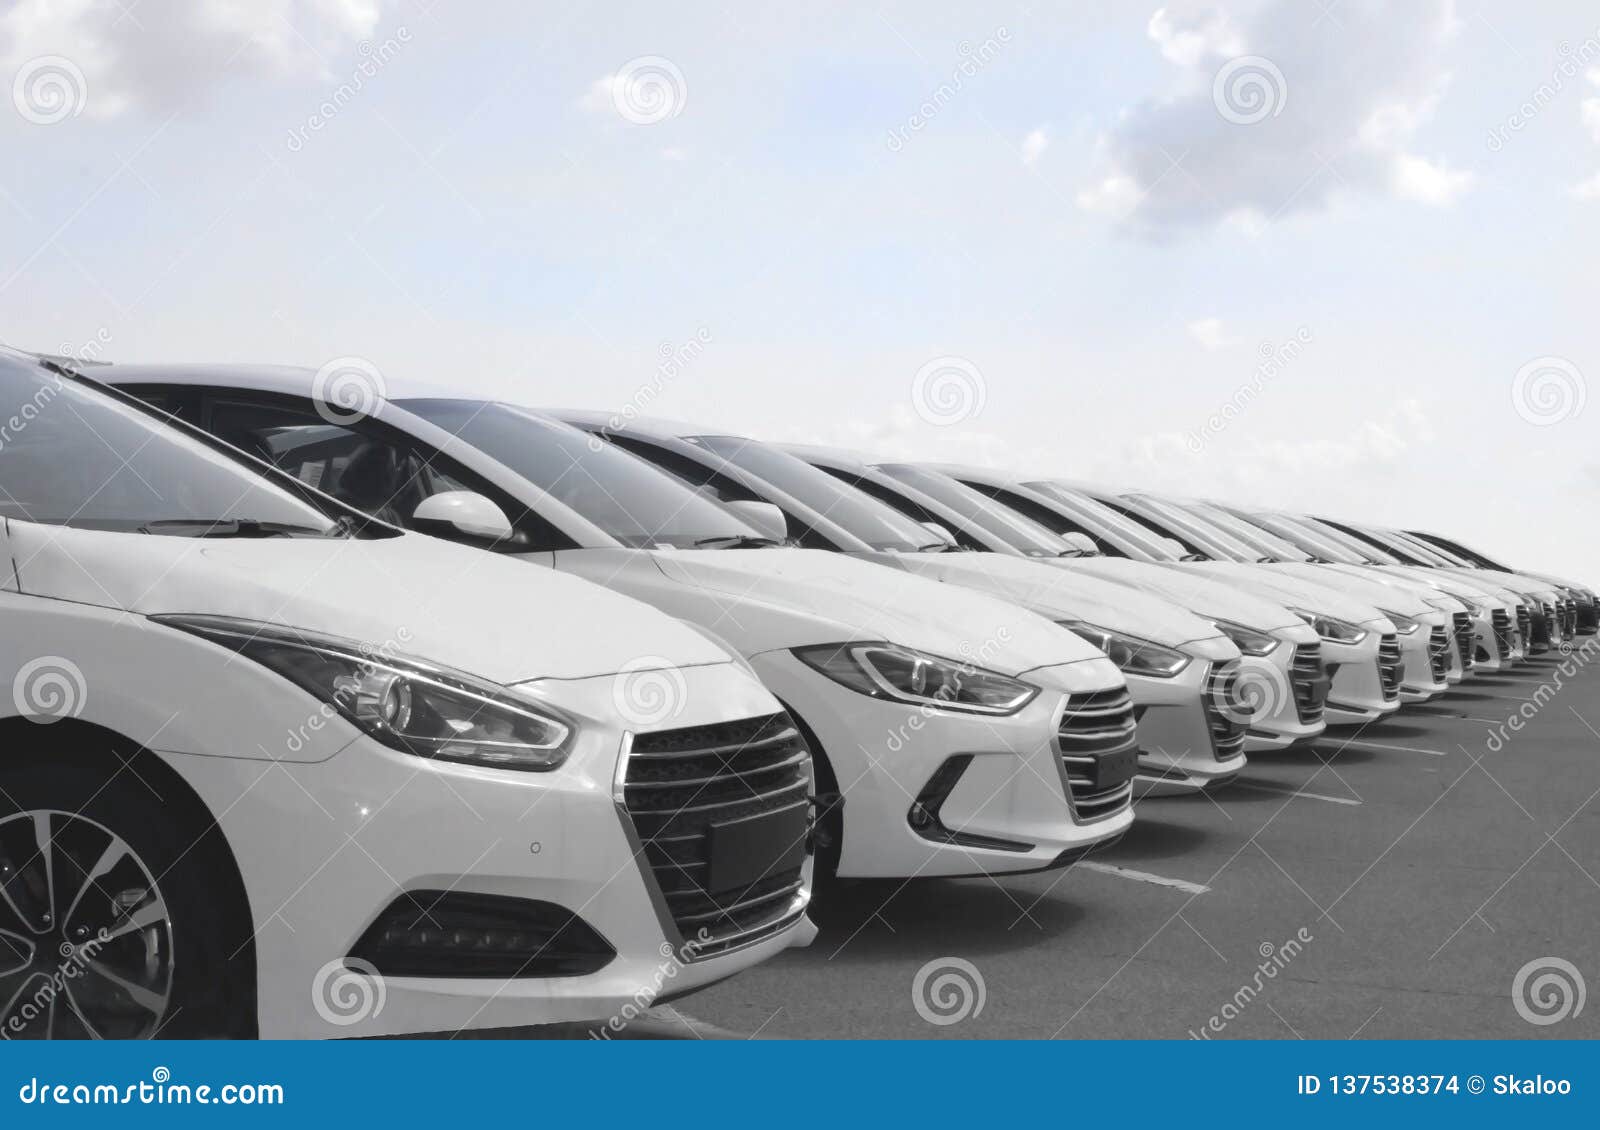 fleet of cars